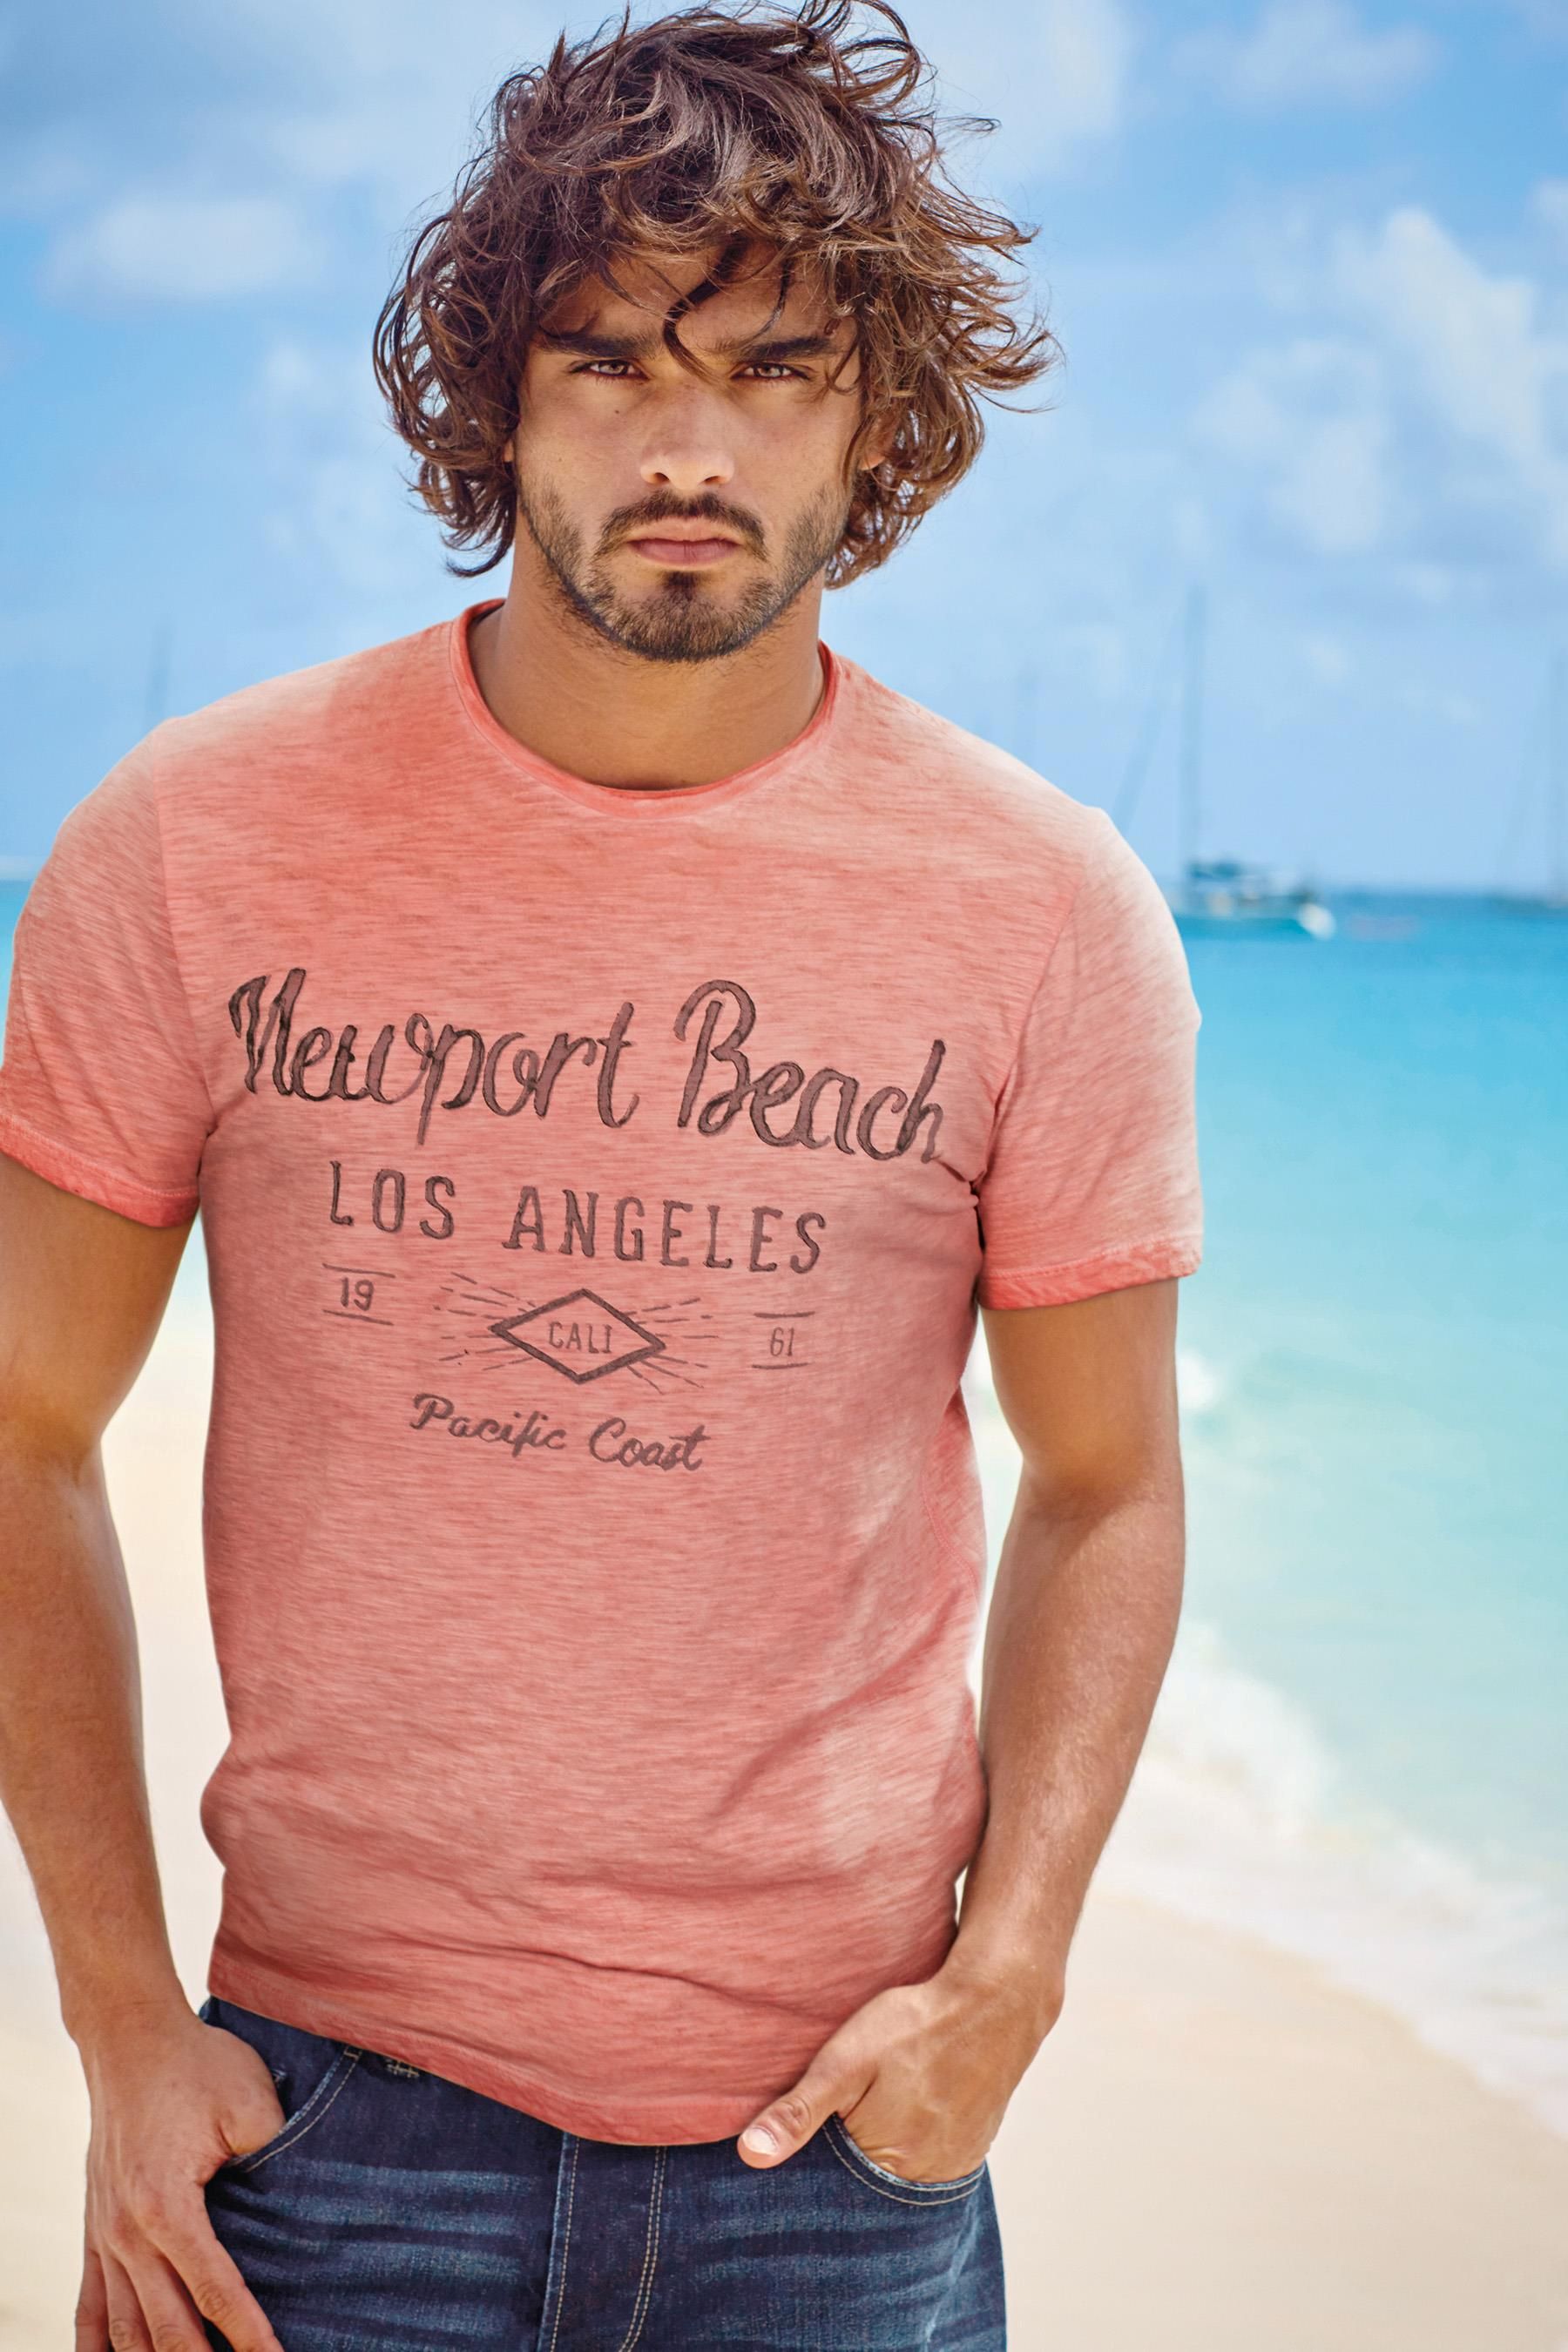 Marlon Teixeira Rocks Next Summer Beach Style | The Fashionisto